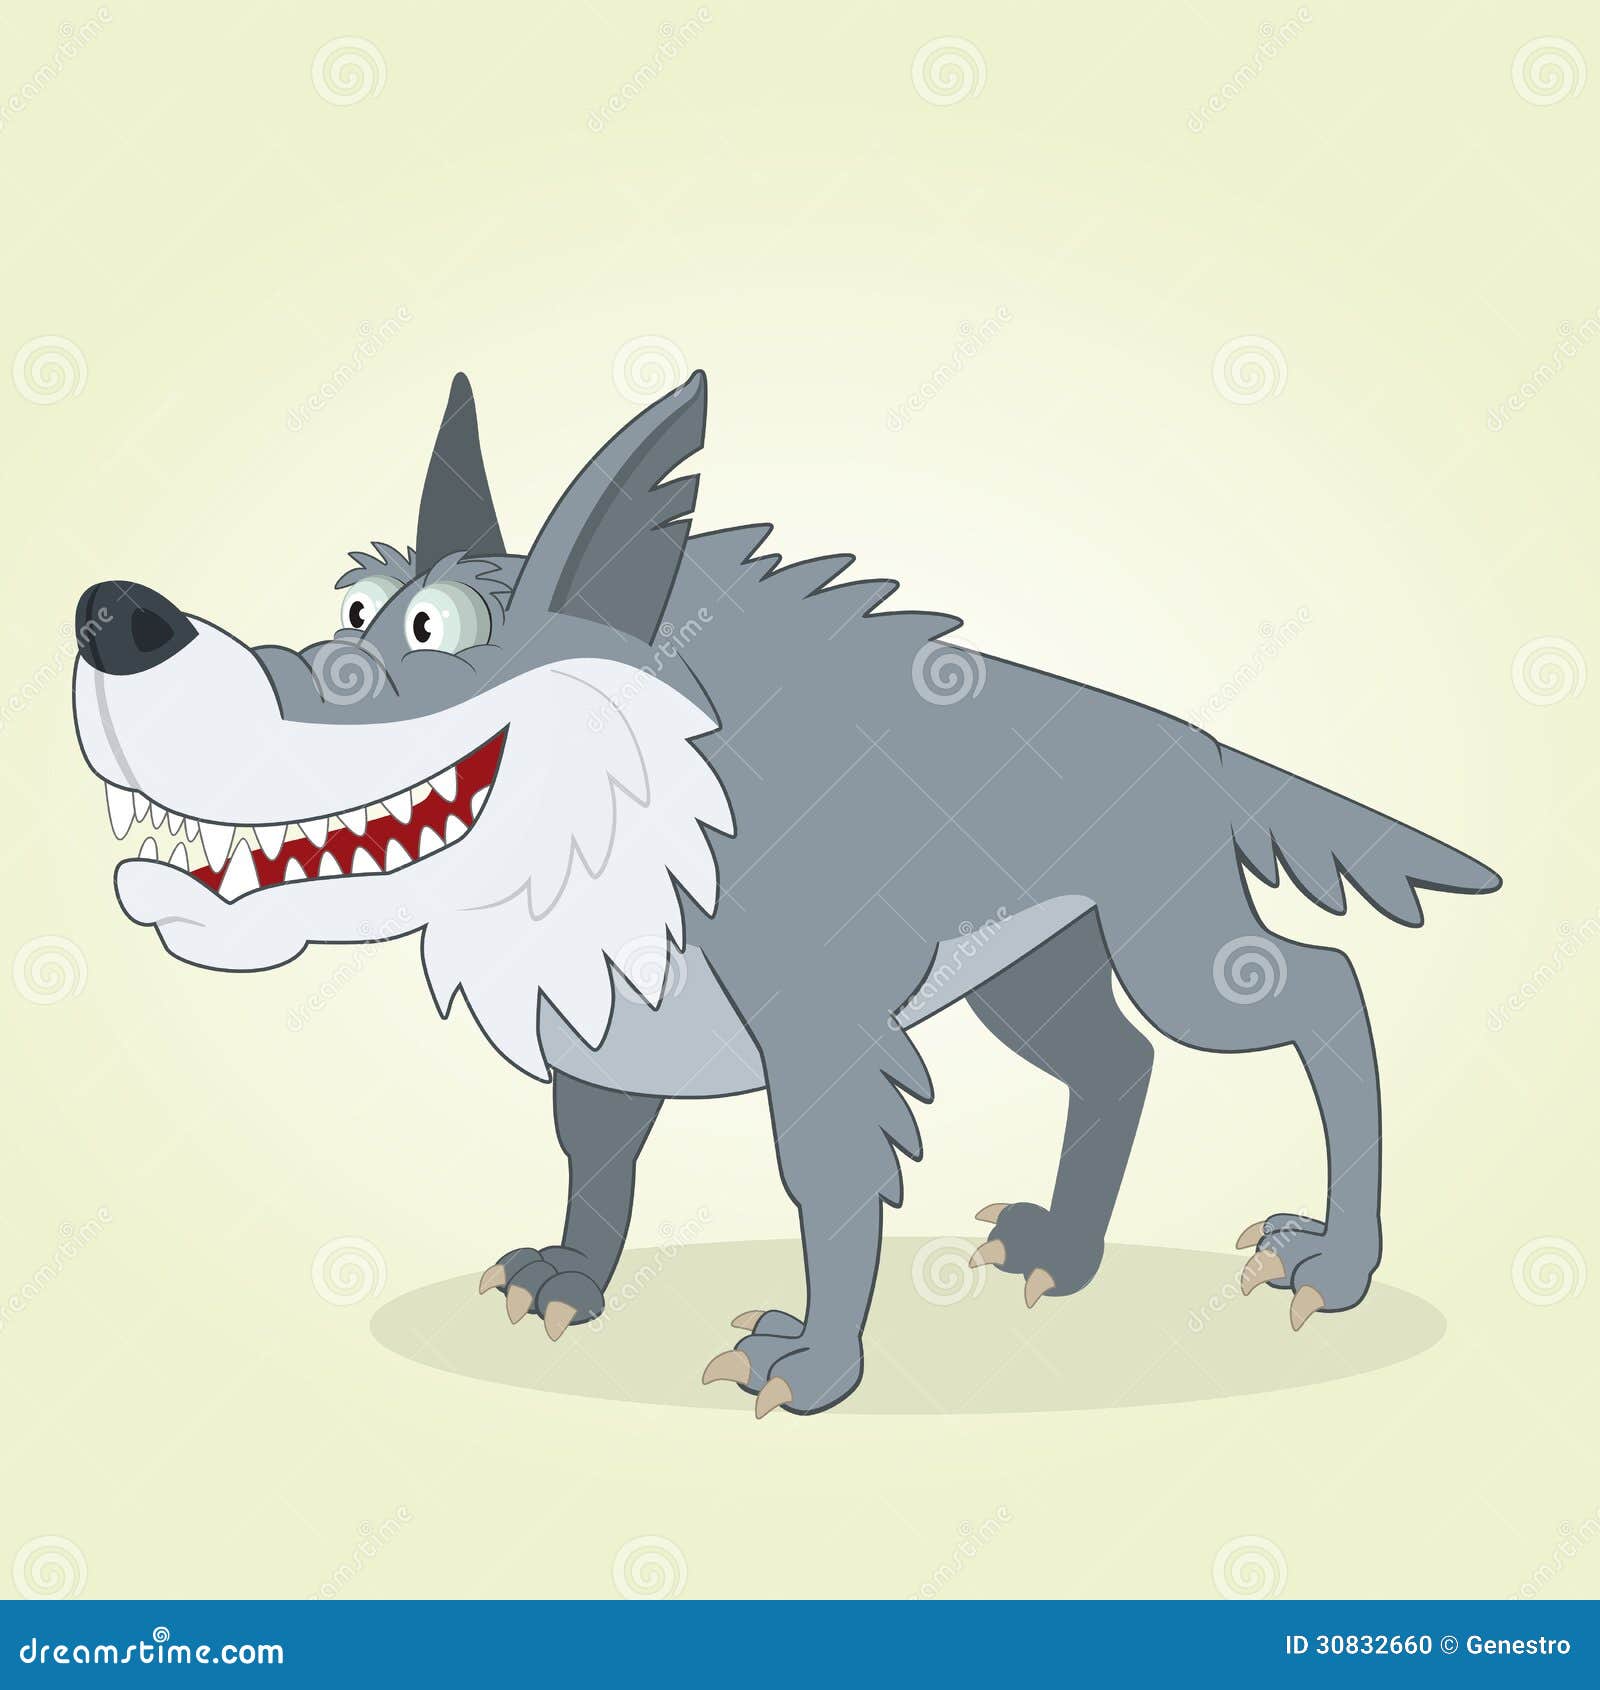 Wolf stock illustration. Illustration of funny, cute - 30832660